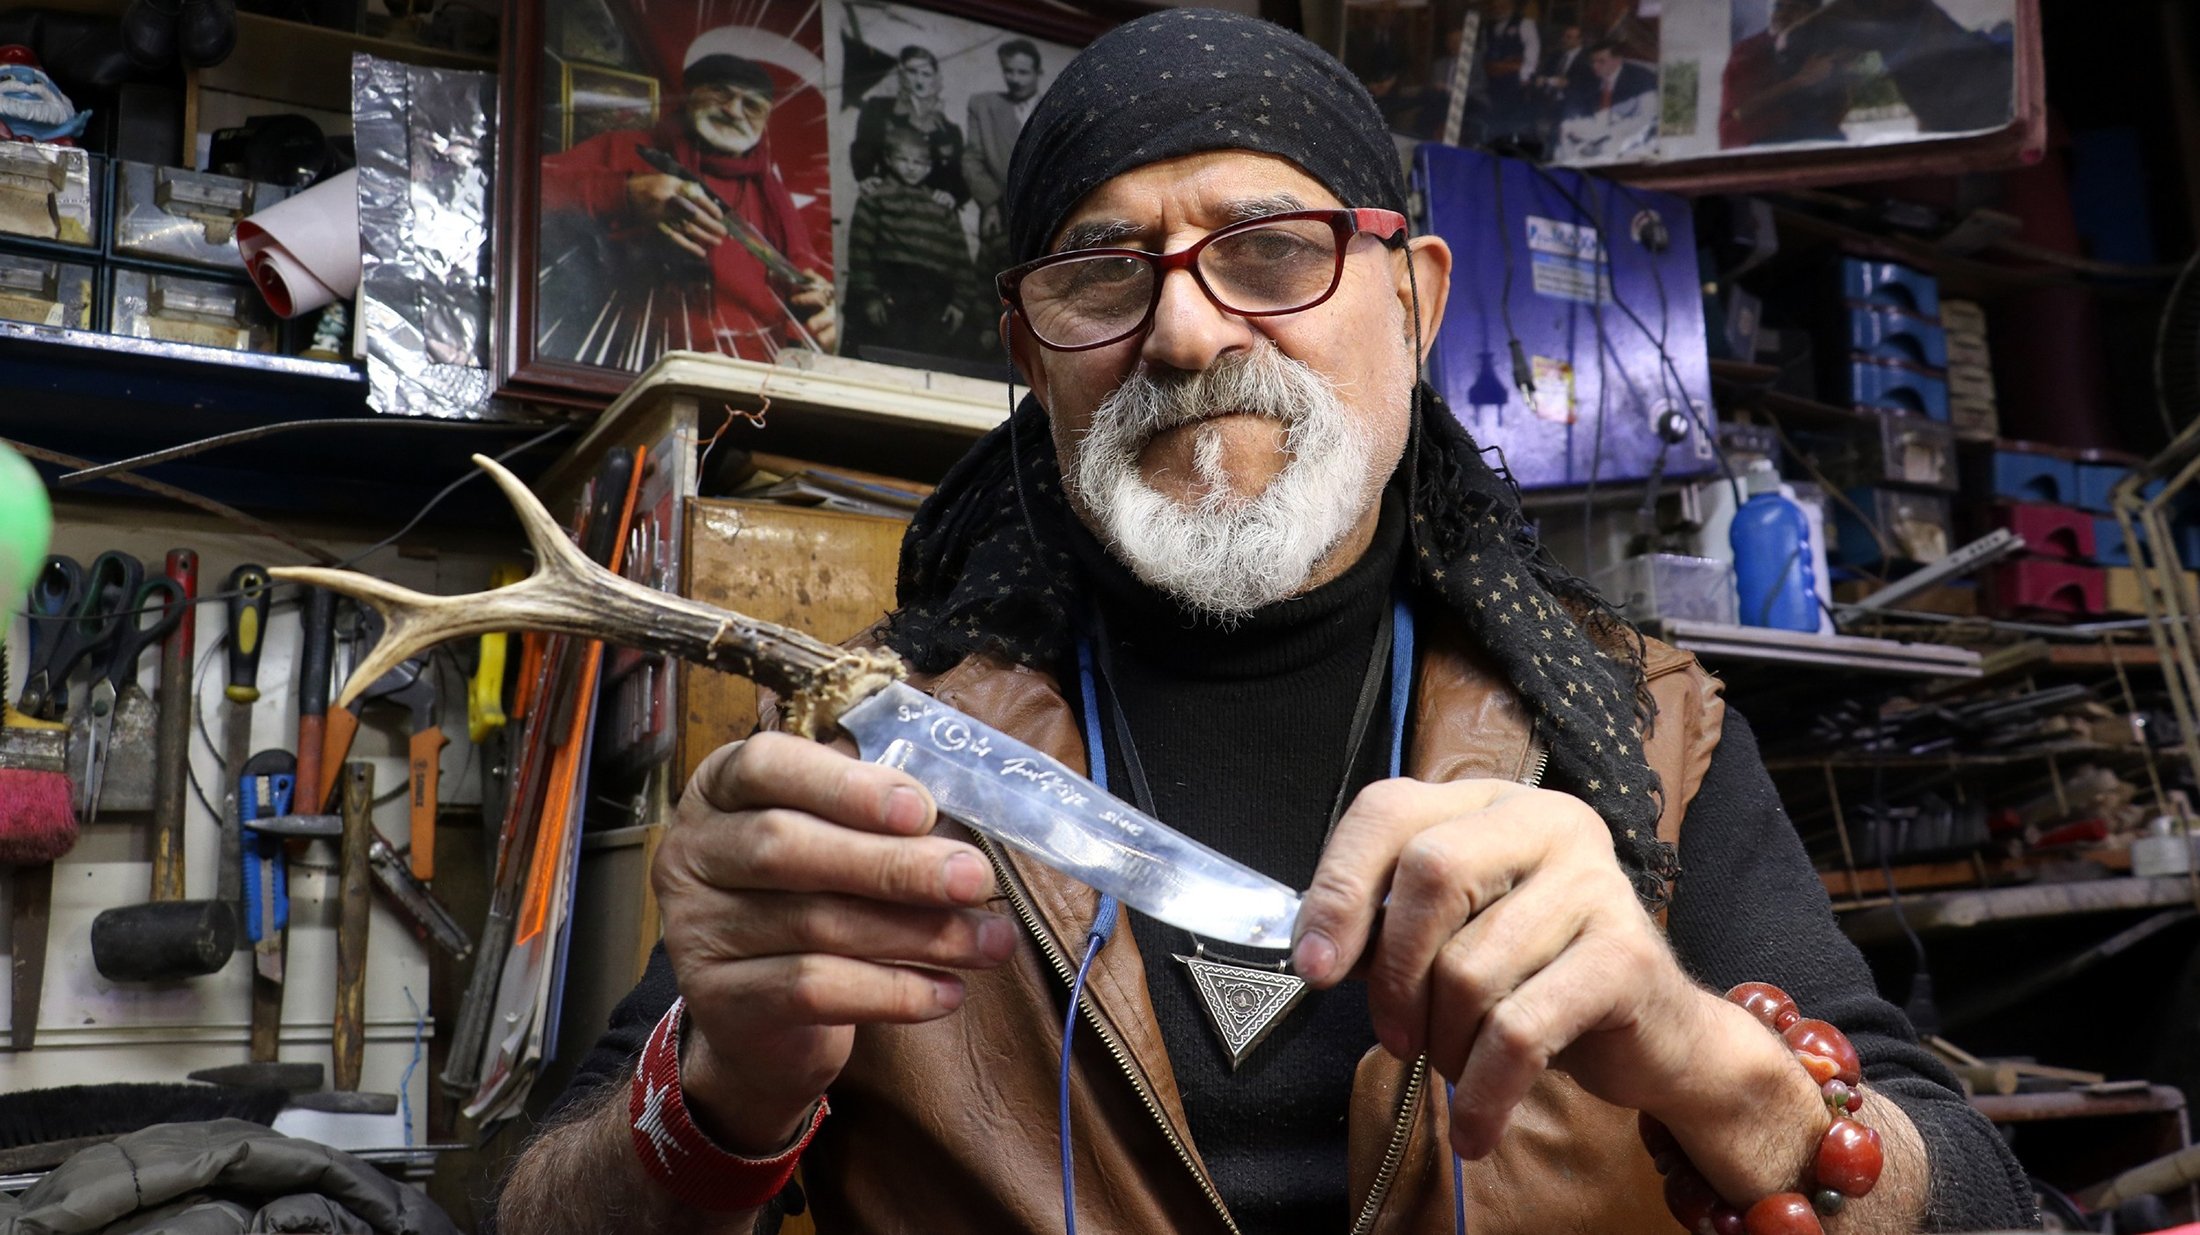 Erdoğan Güzel, maker of world's smallest knives, shows one his knives in his workshop, in Sivas, Turkey, Nov. 10, 2021. (IHA Photo)